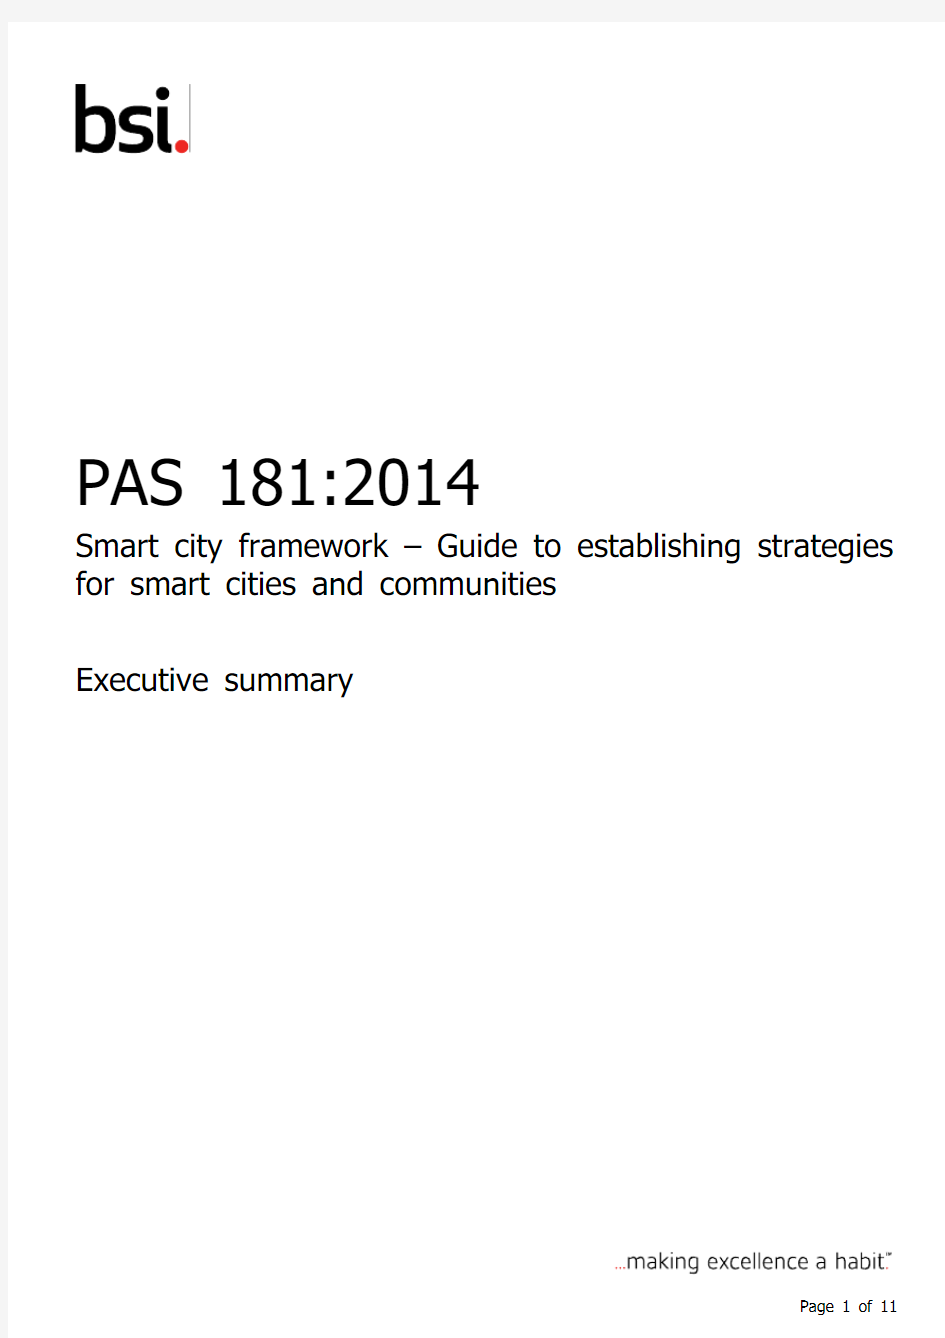 BSI-PAS-181-executive-summary-UK-EN